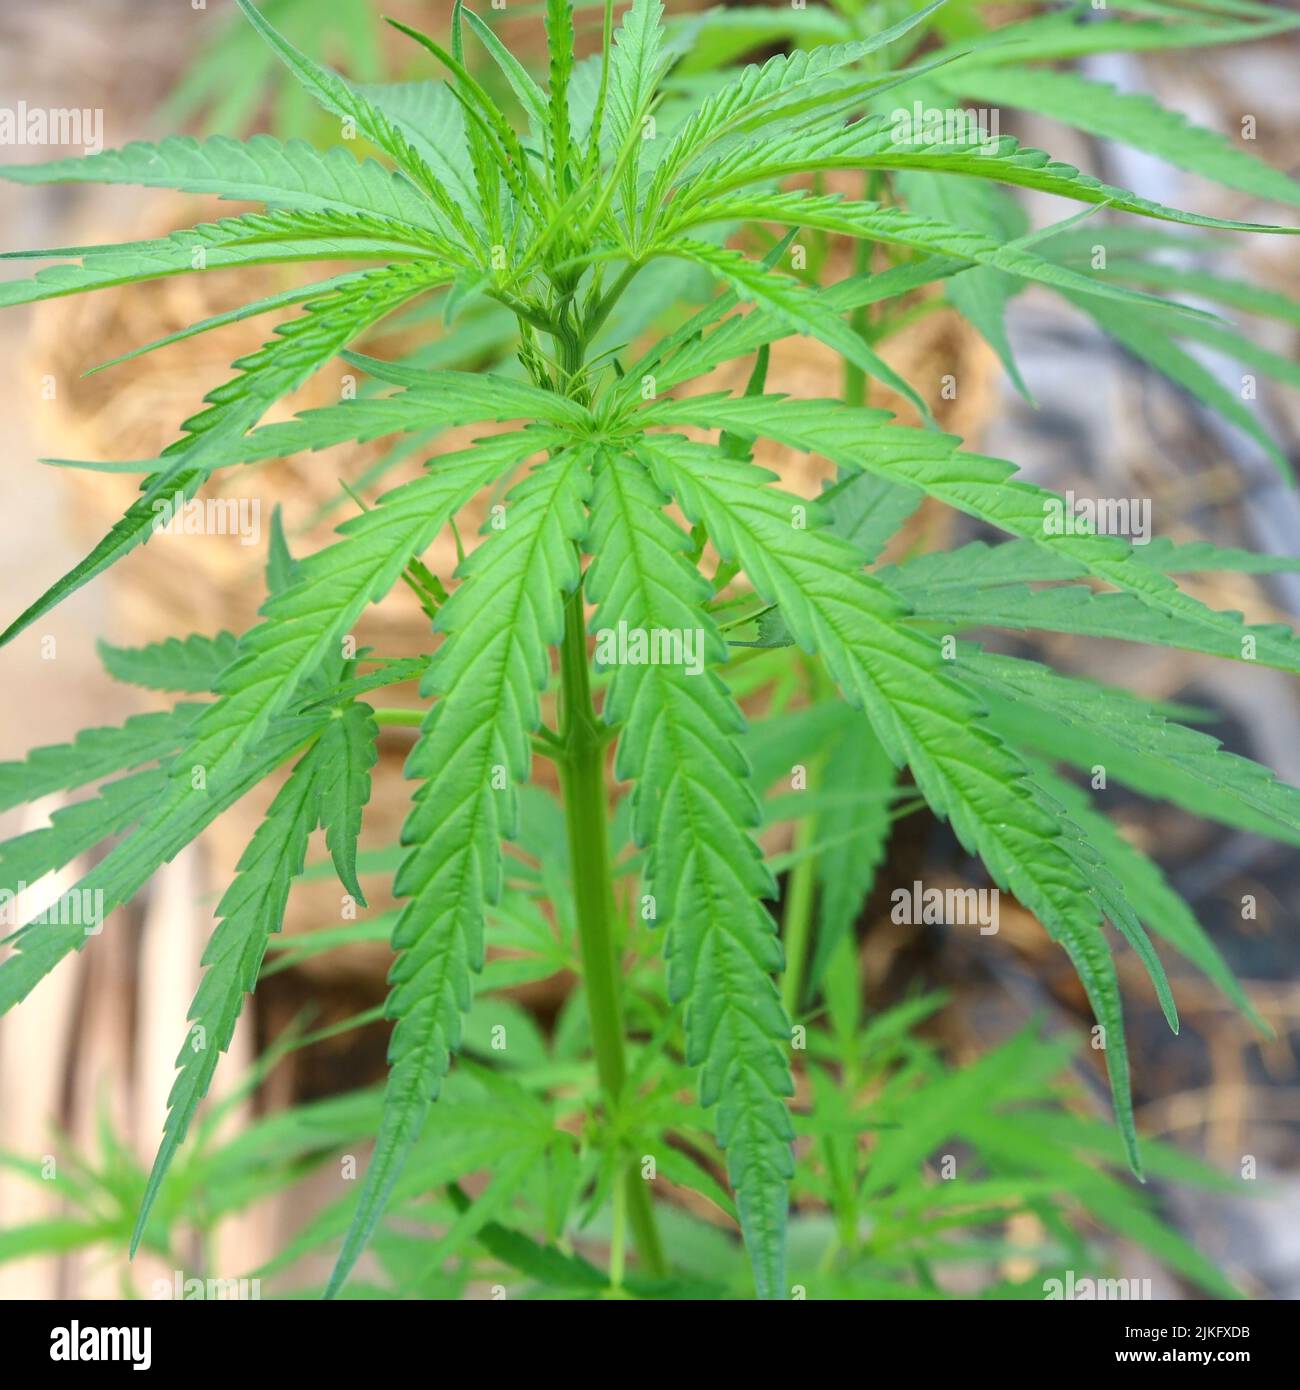 closeup of cannabis plants, young marijuana leaf Stock Photo